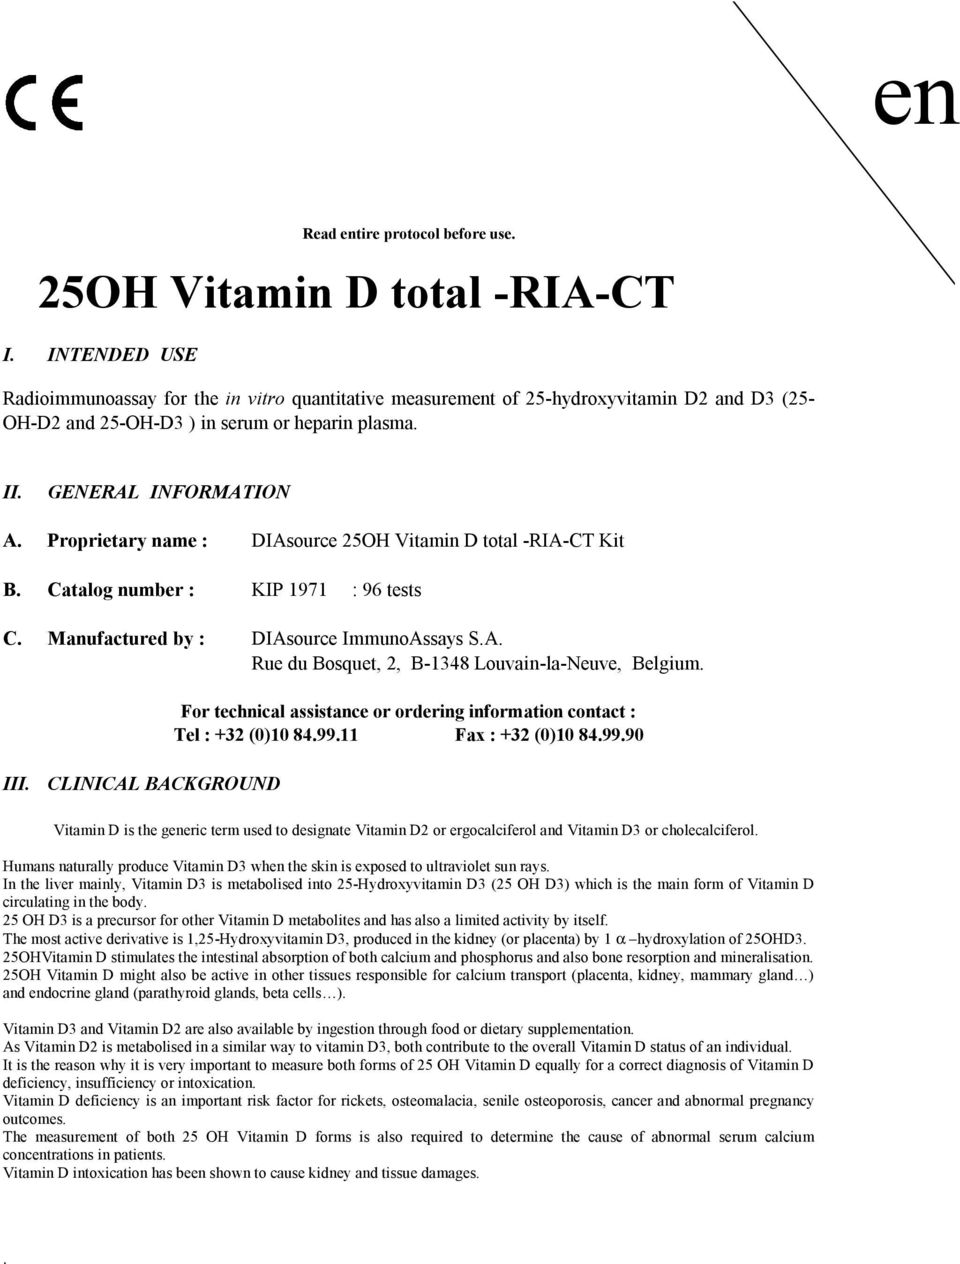 Proprietary name : DIAsource 25OH Vitamin D total RIACT Kit B. Catalog number : KIP 1971 : 96 tests C. Manufactured by : DIAsource ImmunoAssays S.A. Rue du Bosquet, 2, B1348 Louvainlaeuve, Belgium.